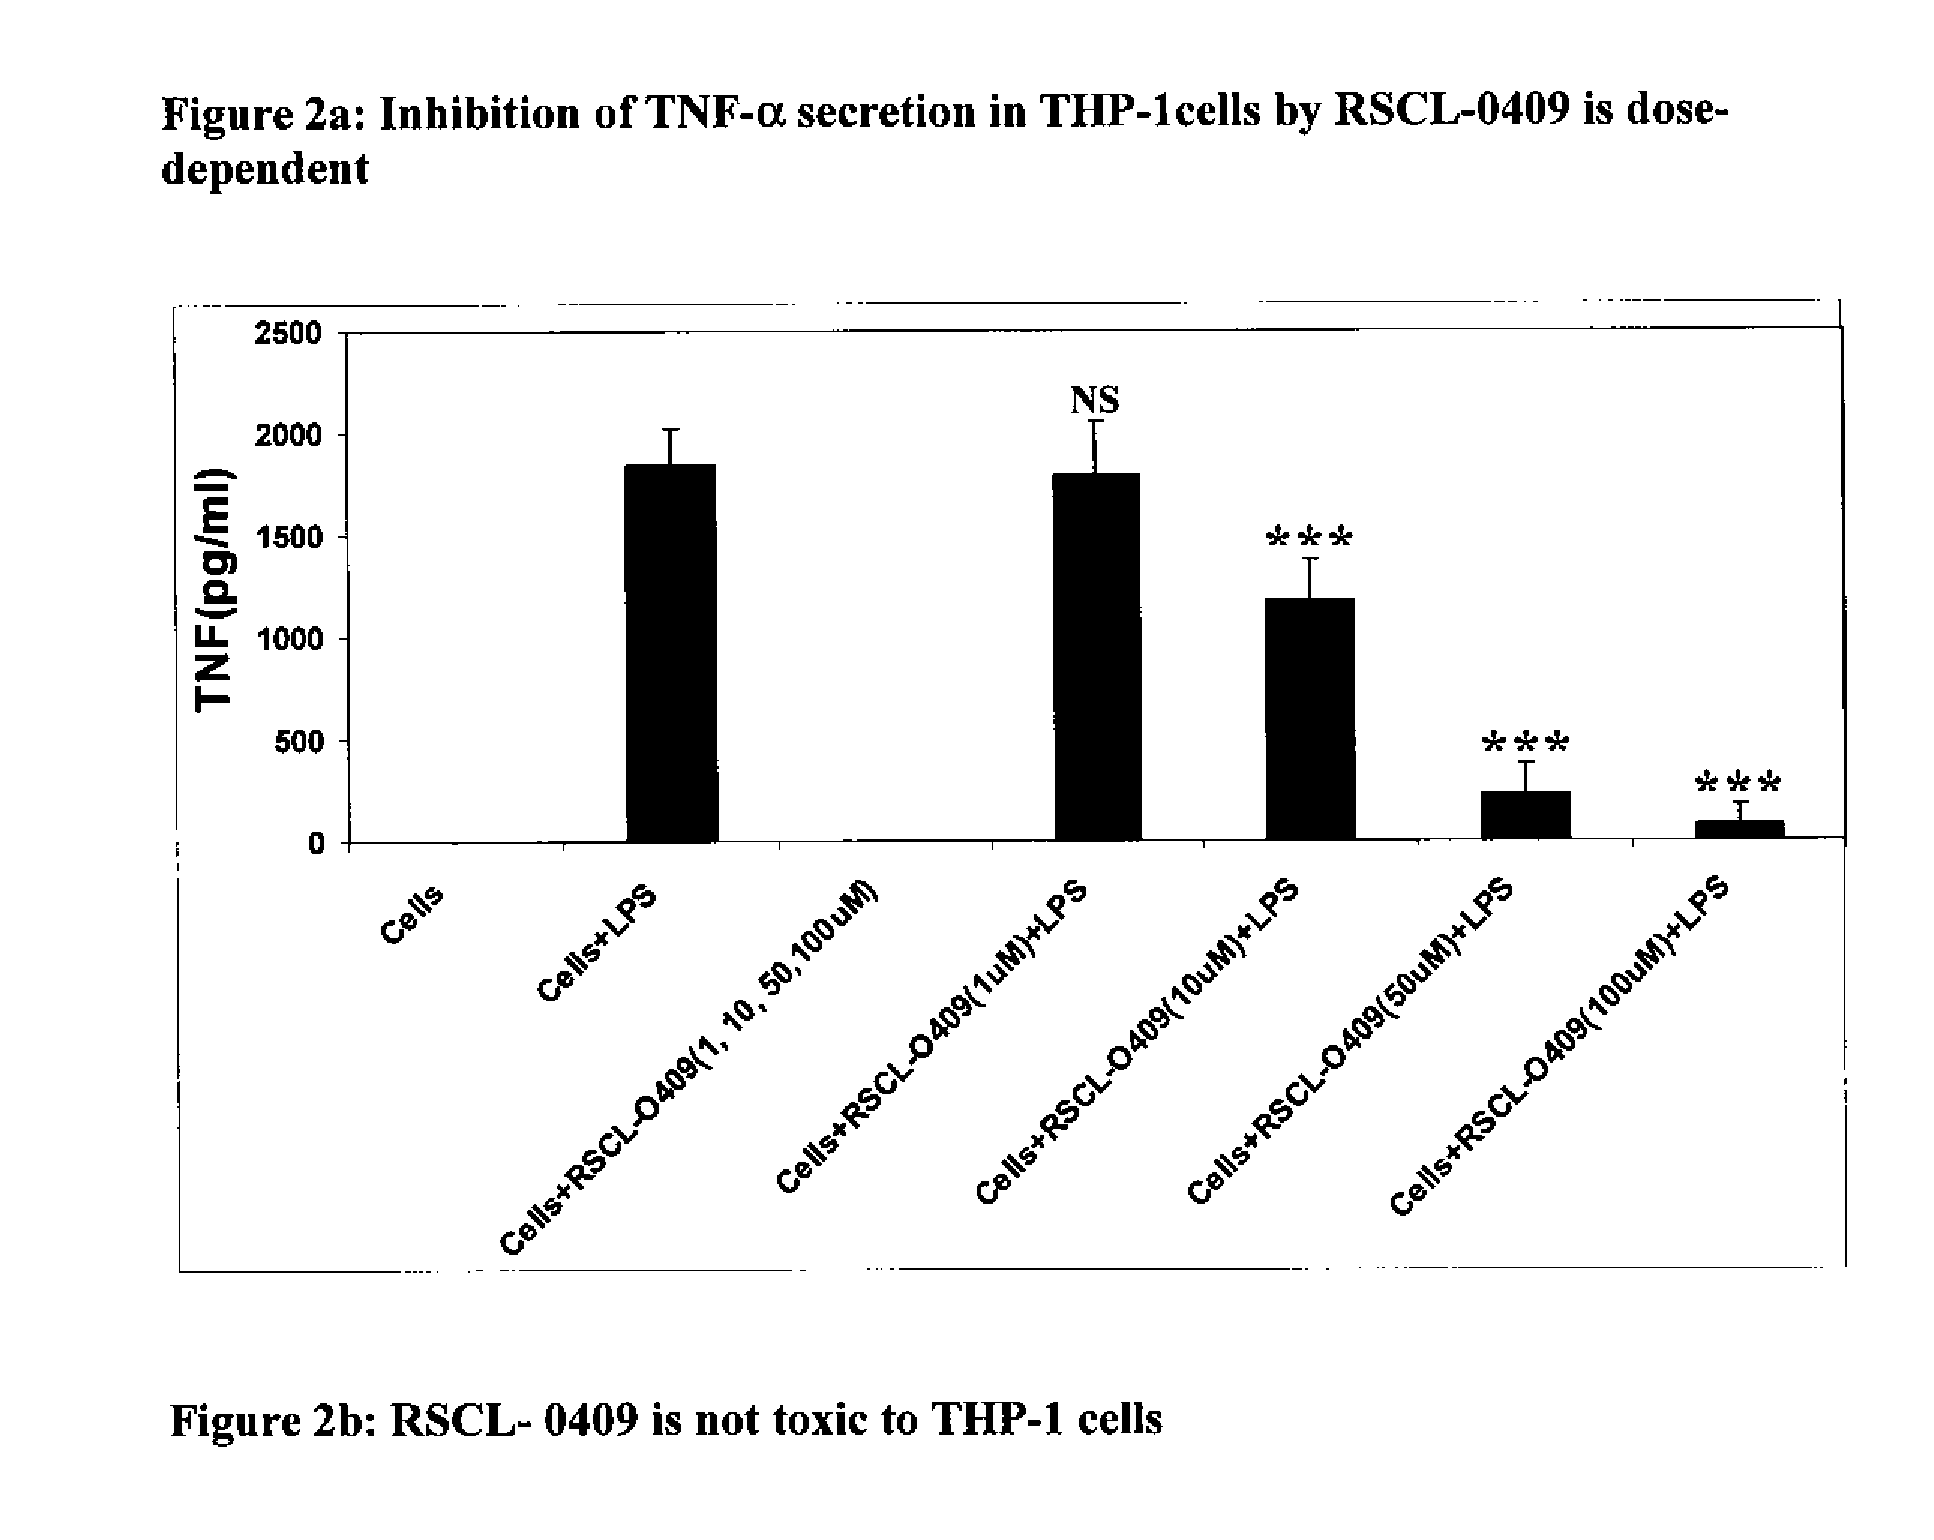 Carbohydrate based toll-like receptor (TLR) antagonists